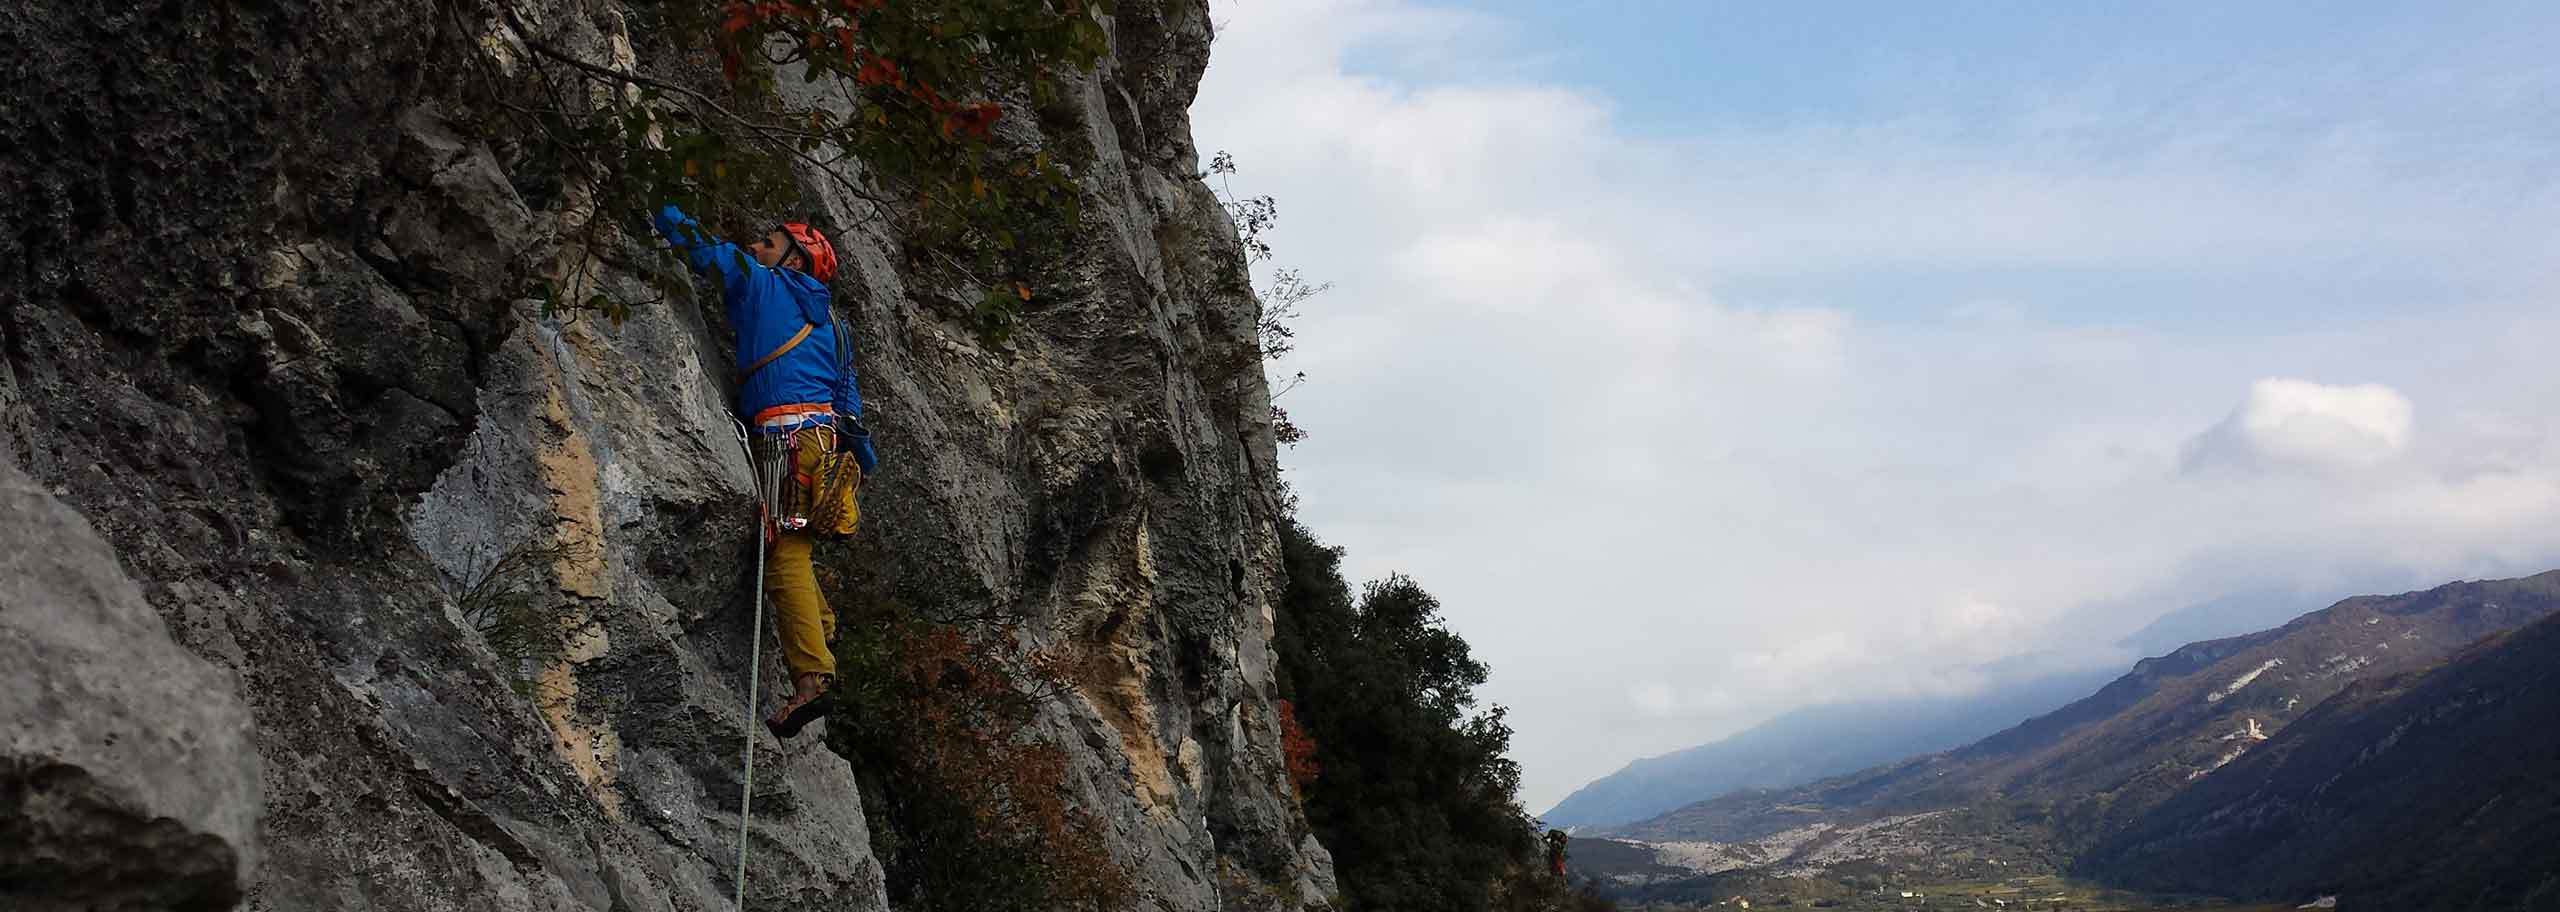 Rock Climbing in Arco & Sarca Valley, Trad and Sport Climbing